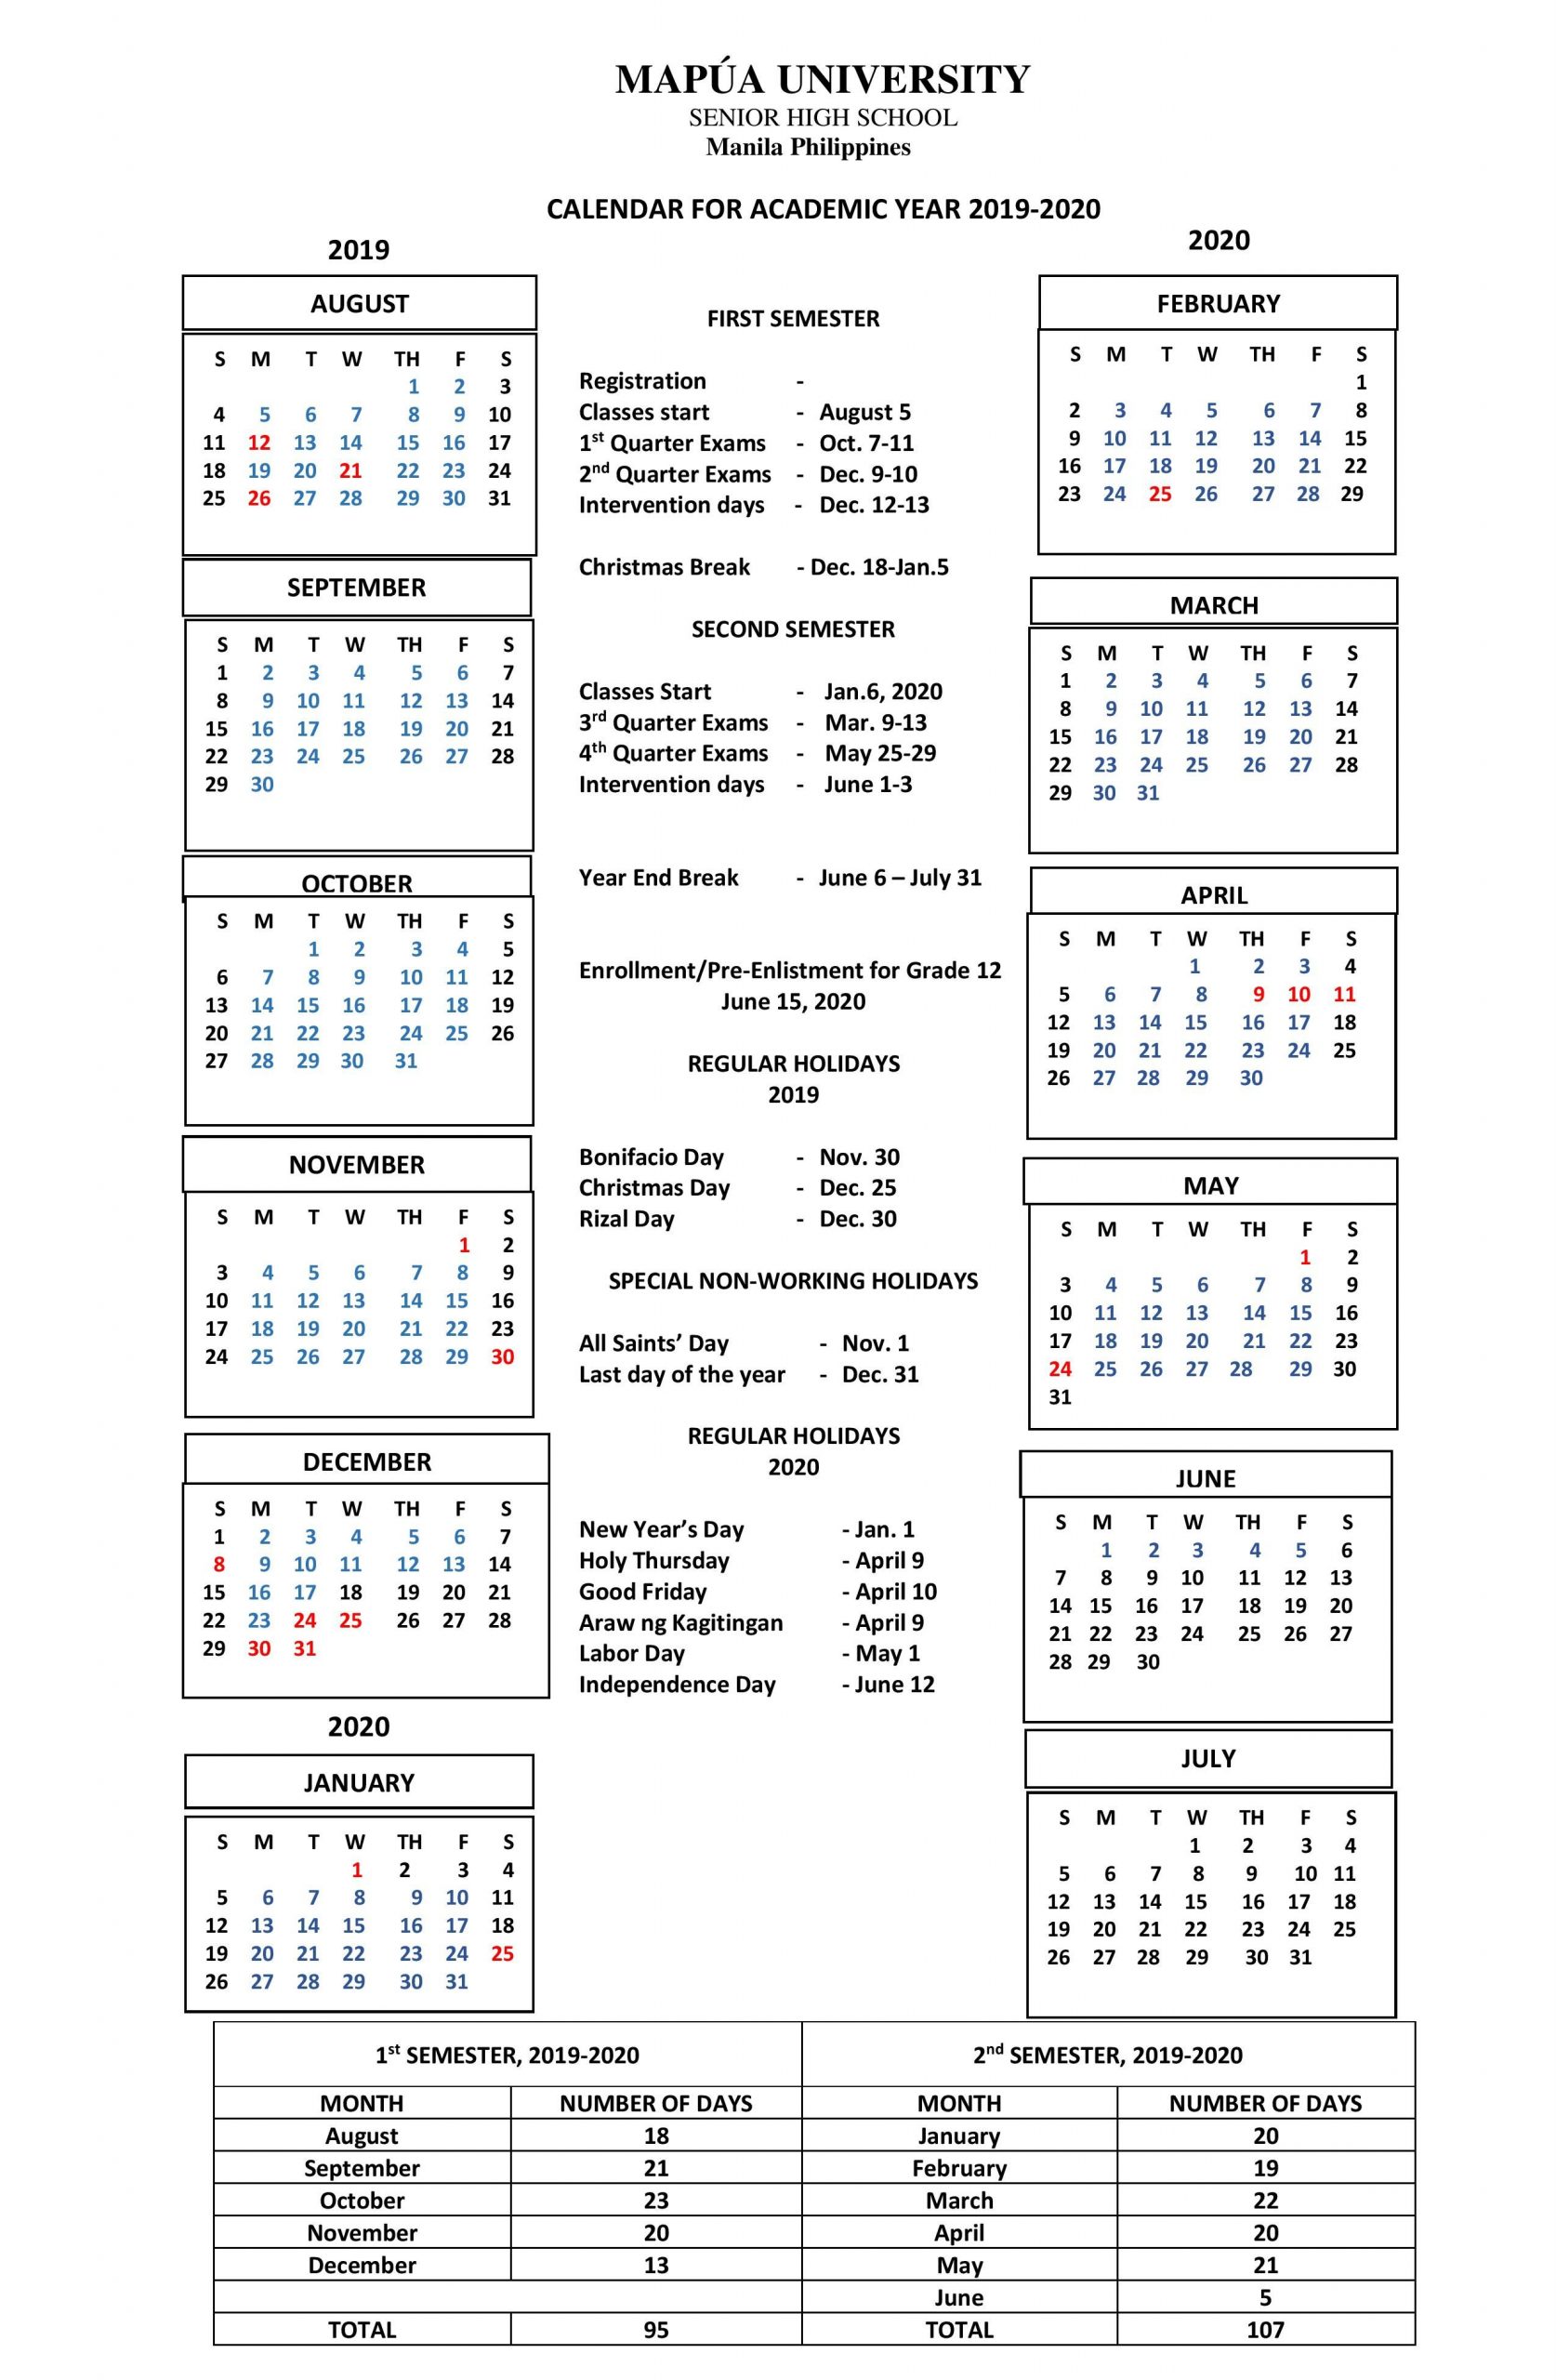 Calendar For Academic Year 2019-2020 (Senior High School